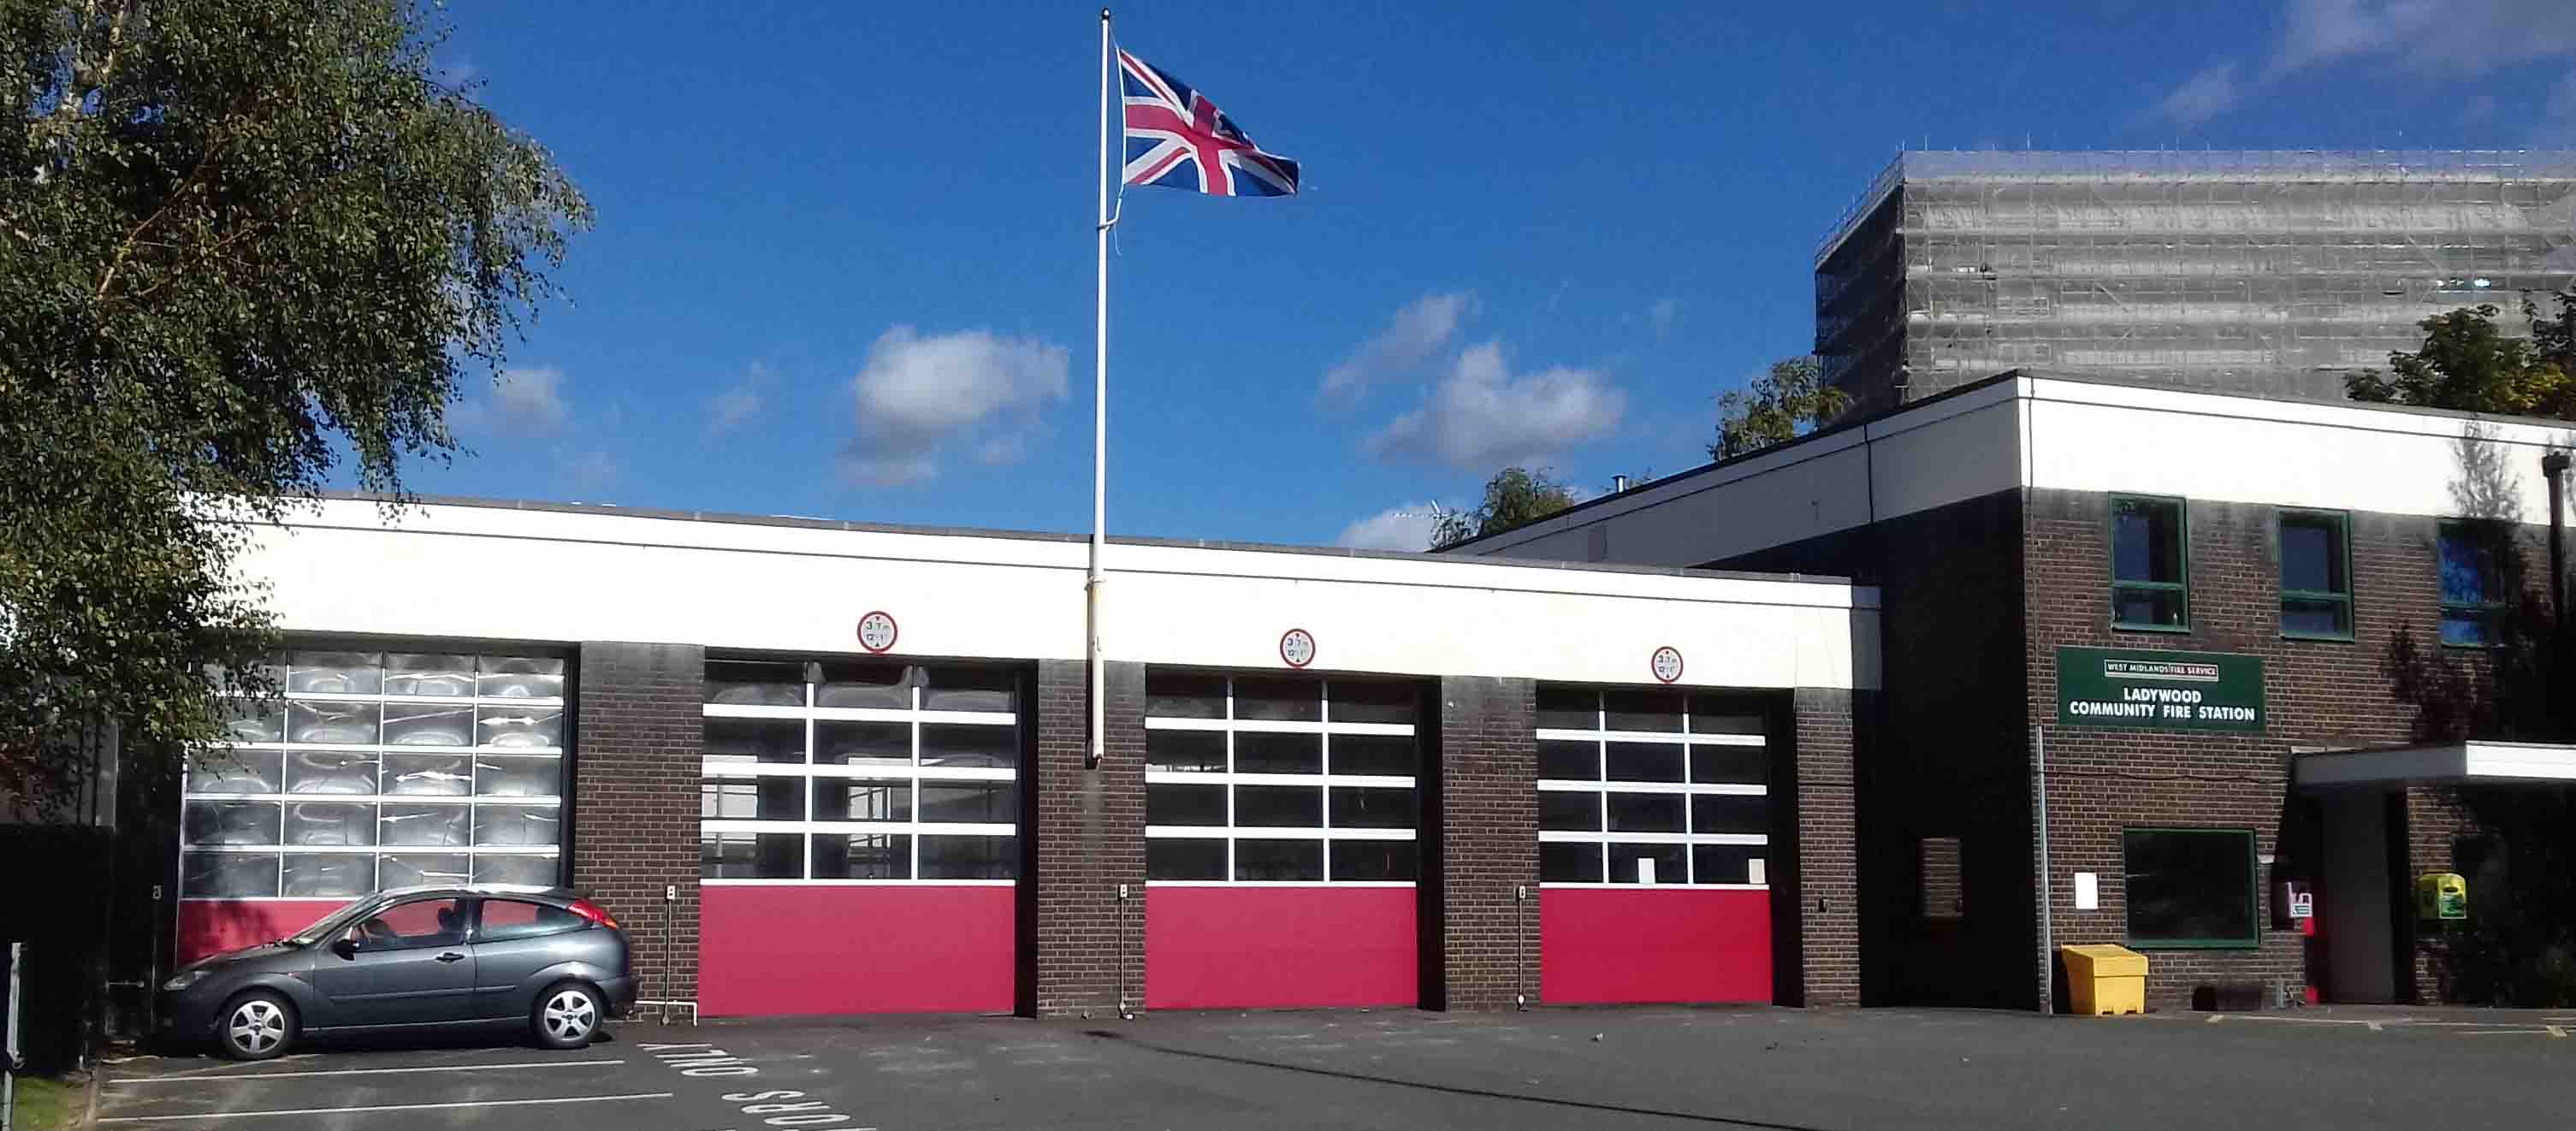 ImagesBirmingham/Birmingham Centre Ladywood Fire Station.jpg